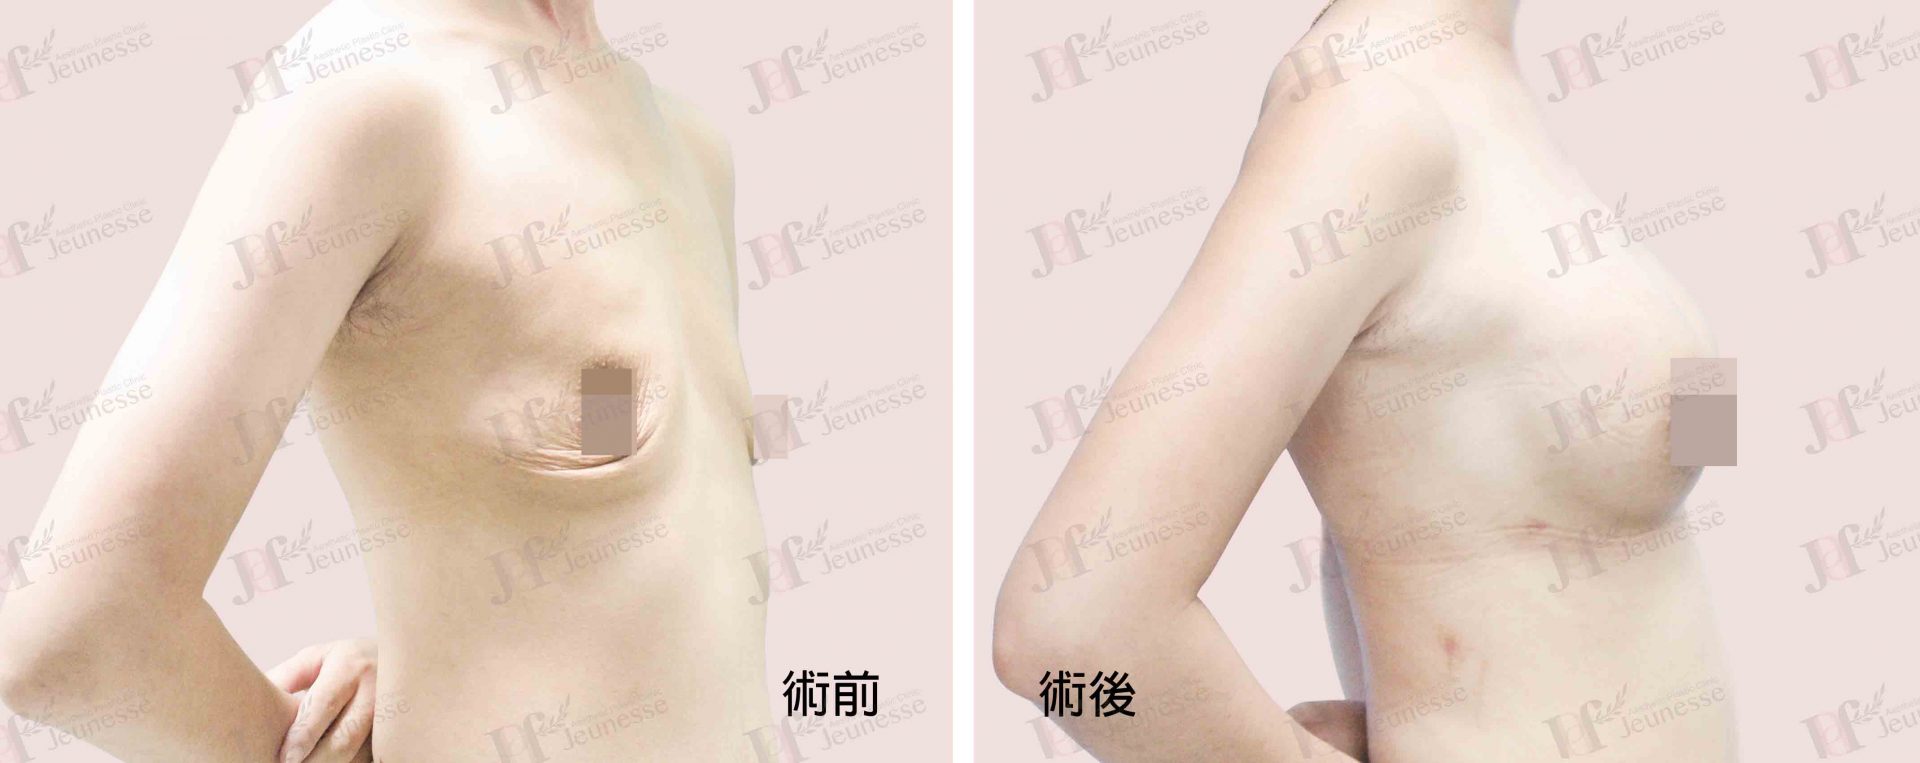 Breast Augmentation- Silicone implants -case2 側面-浮水印